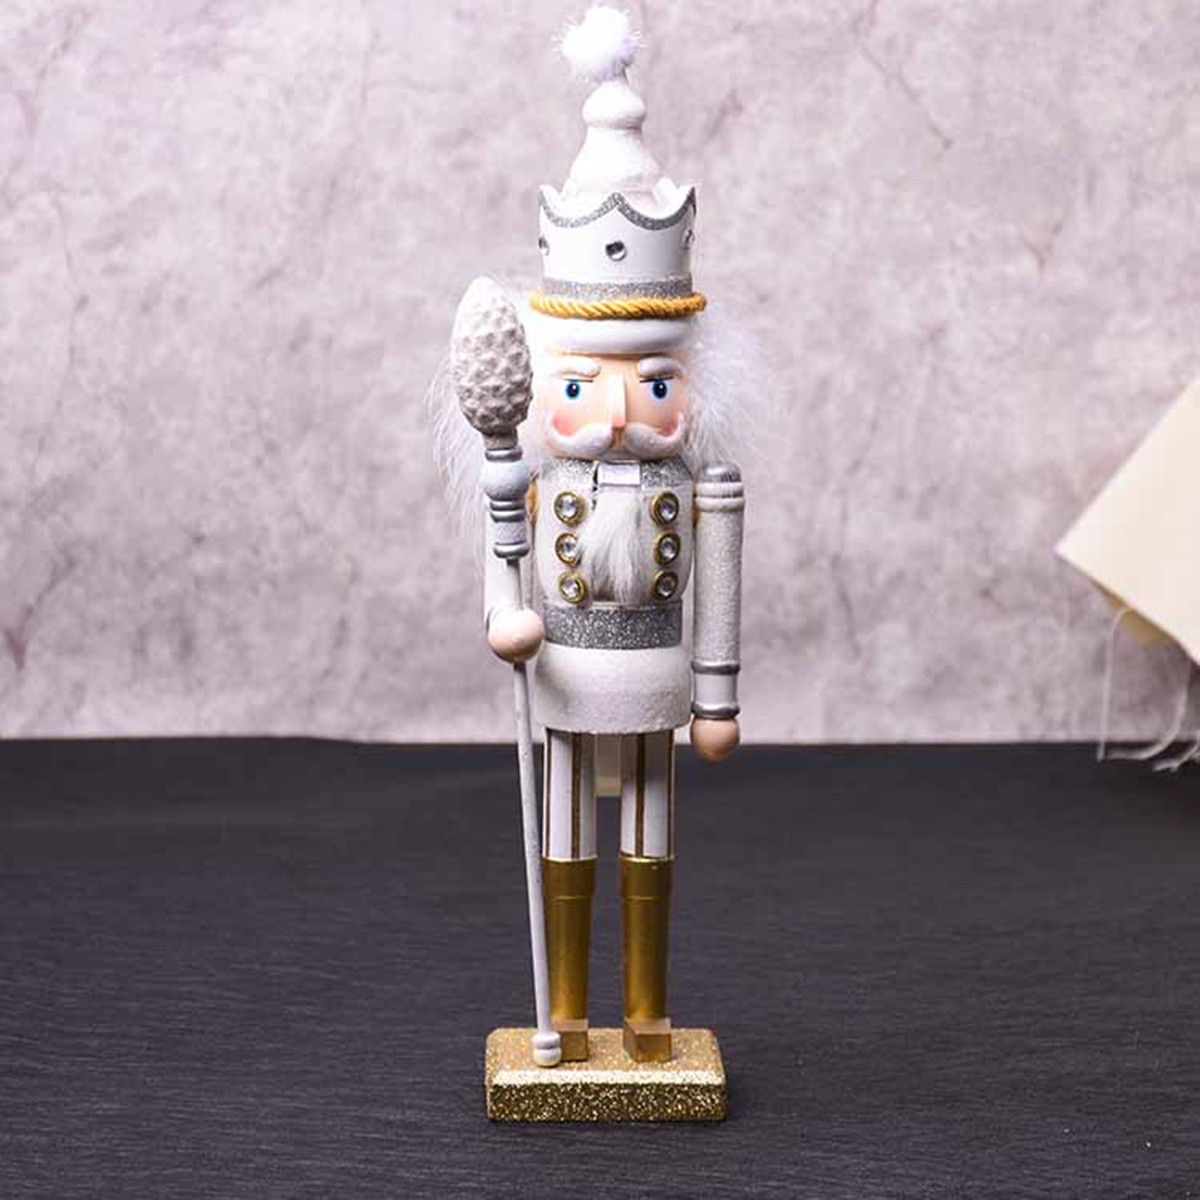 42cm-Wooden-Nutcracker-Doll-Soldier-Vintage-Handcraft-Decoration-Christmas-Action-Figure-Gifts-1386592-6